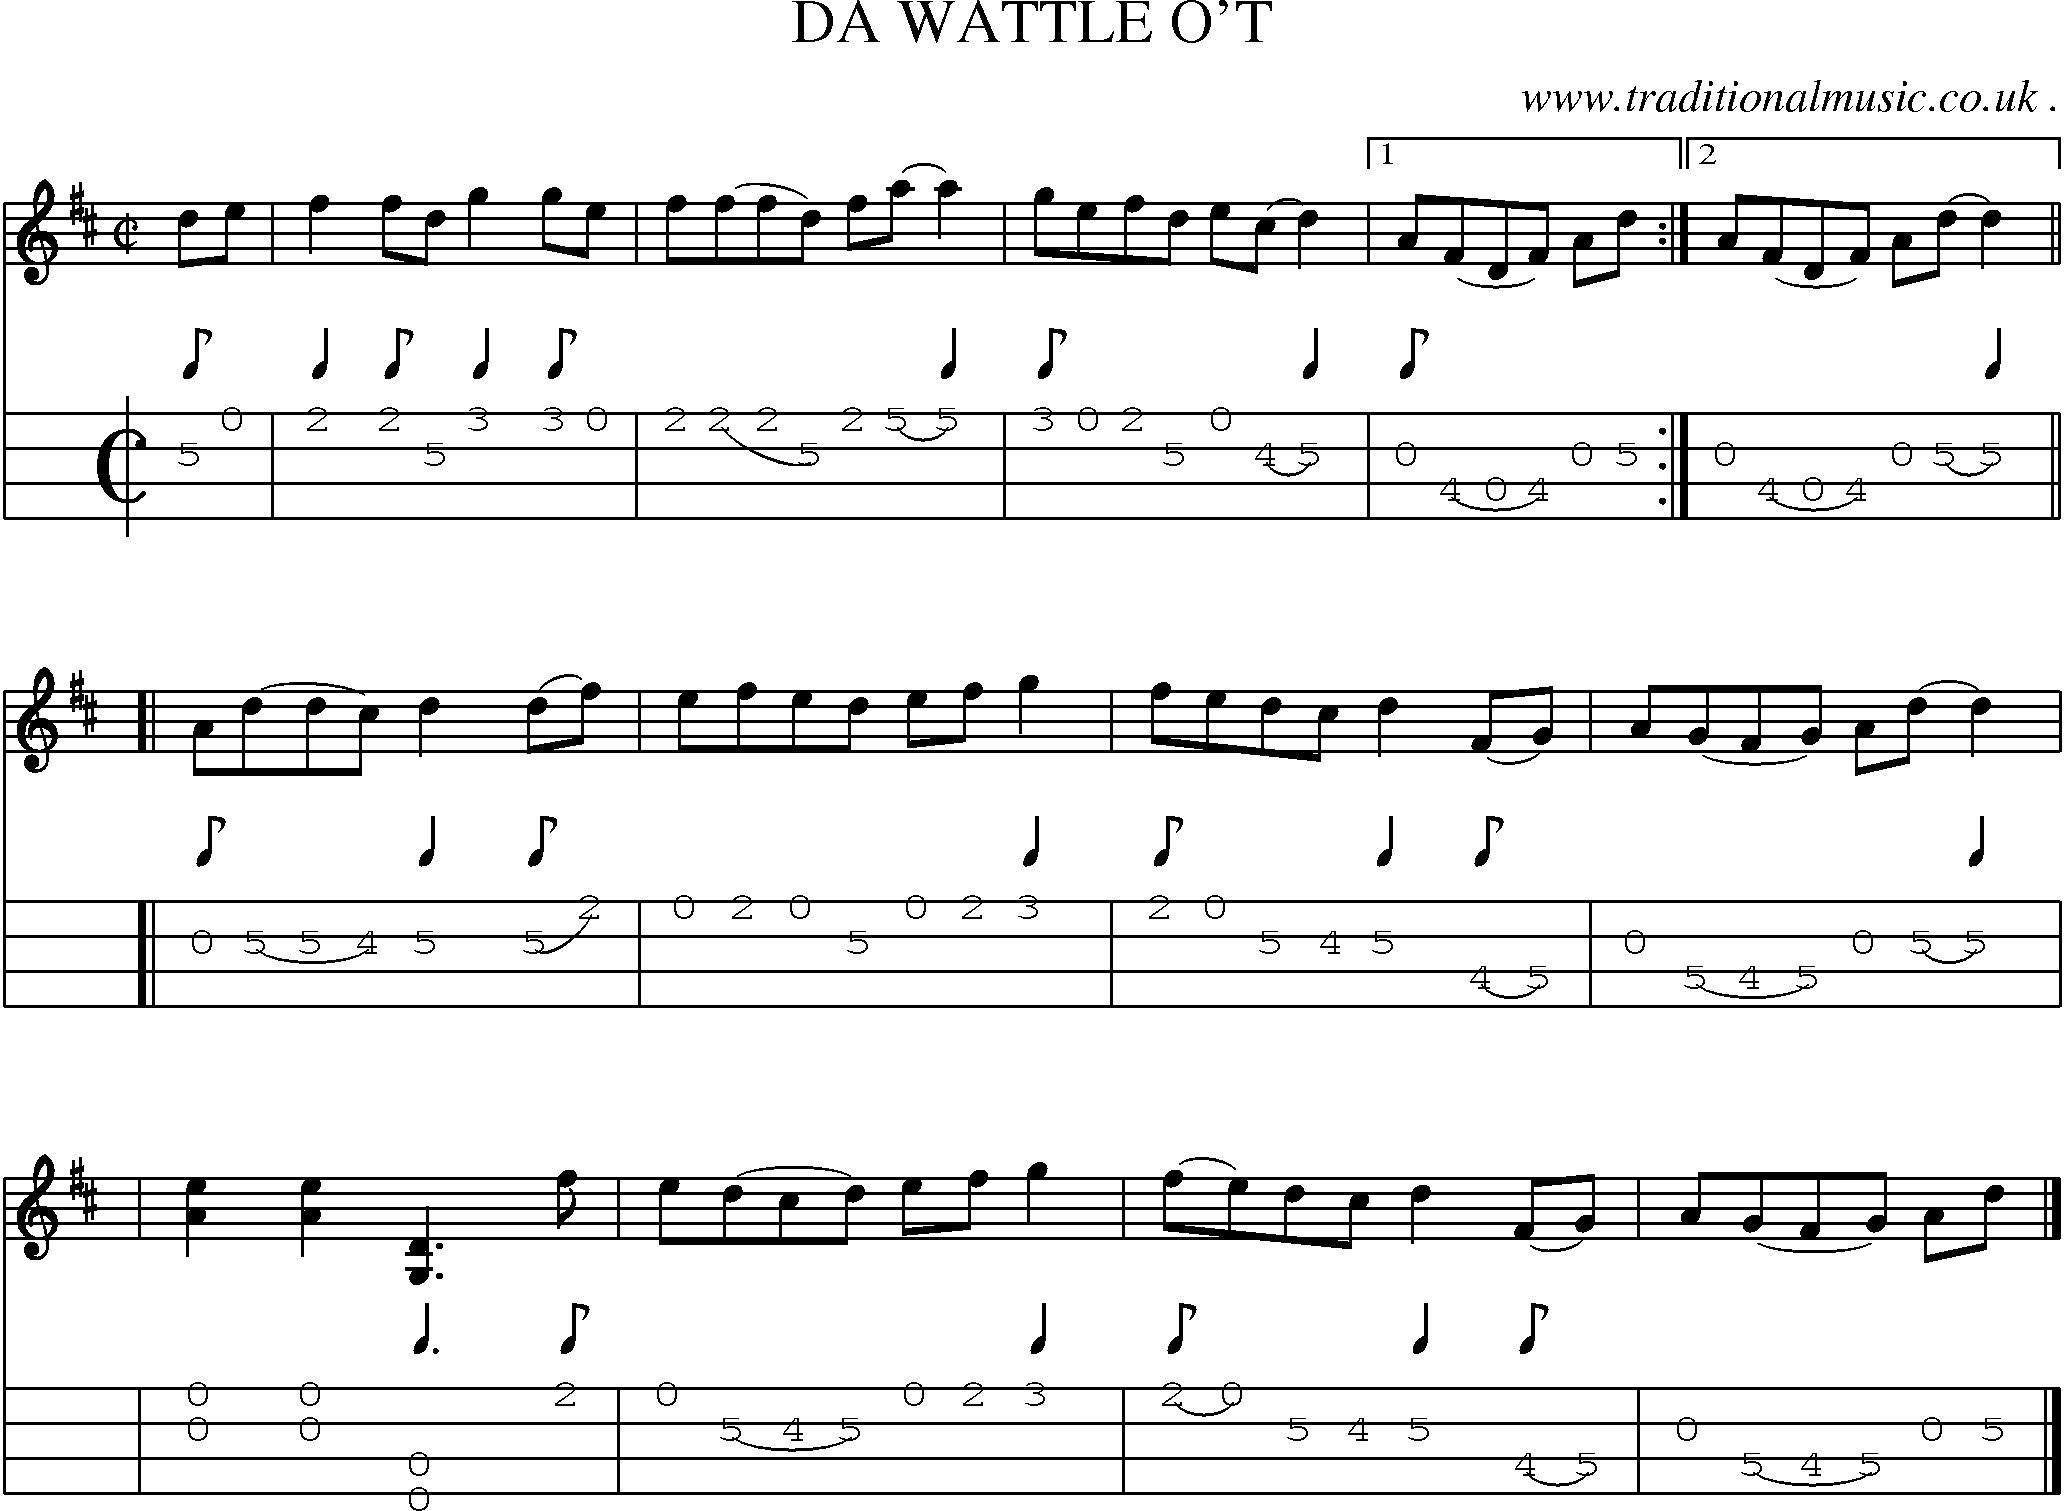 Sheet-music  score, Chords and Mandolin Tabs for Da Wattle Ot